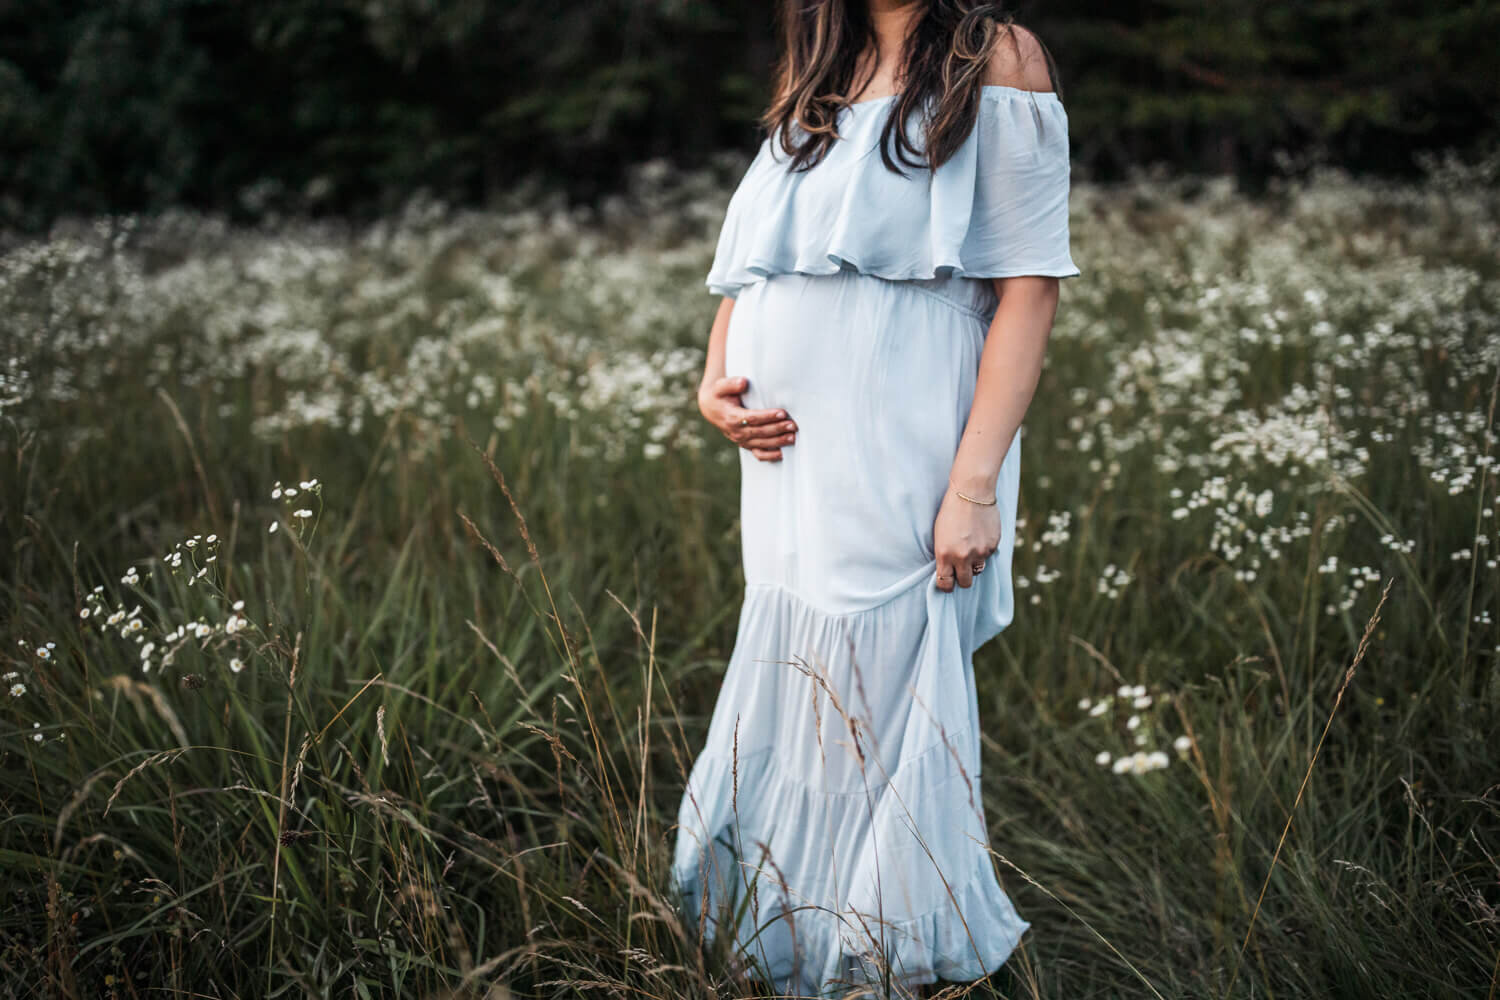 maternity-photos-at-sunset-Emily-Bien-Photography-11.jpg